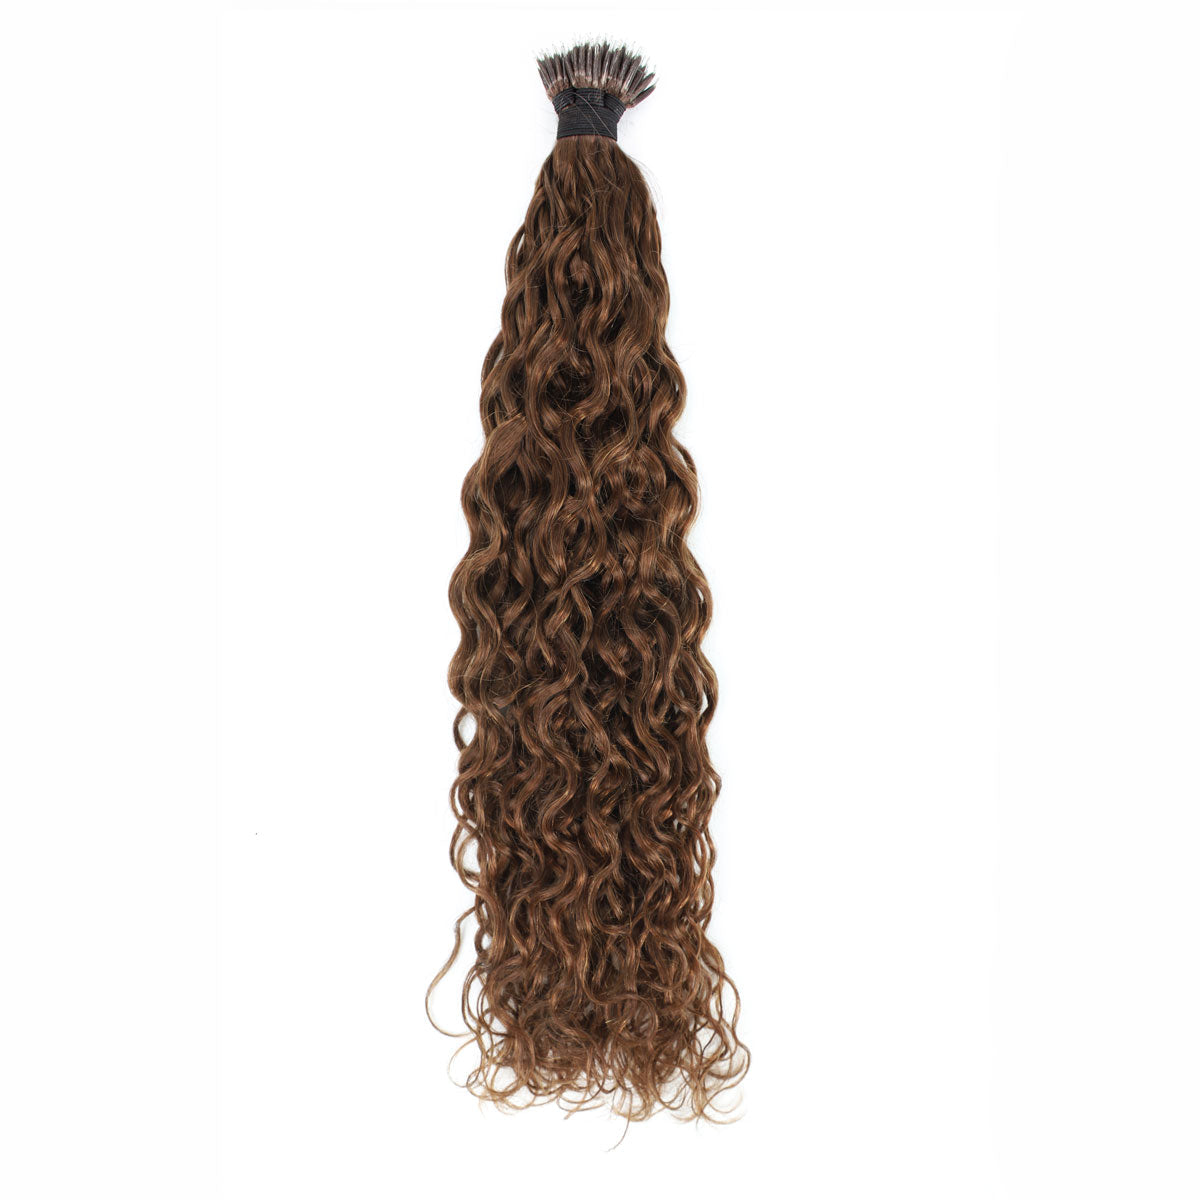 Curly Hair Sample Pack